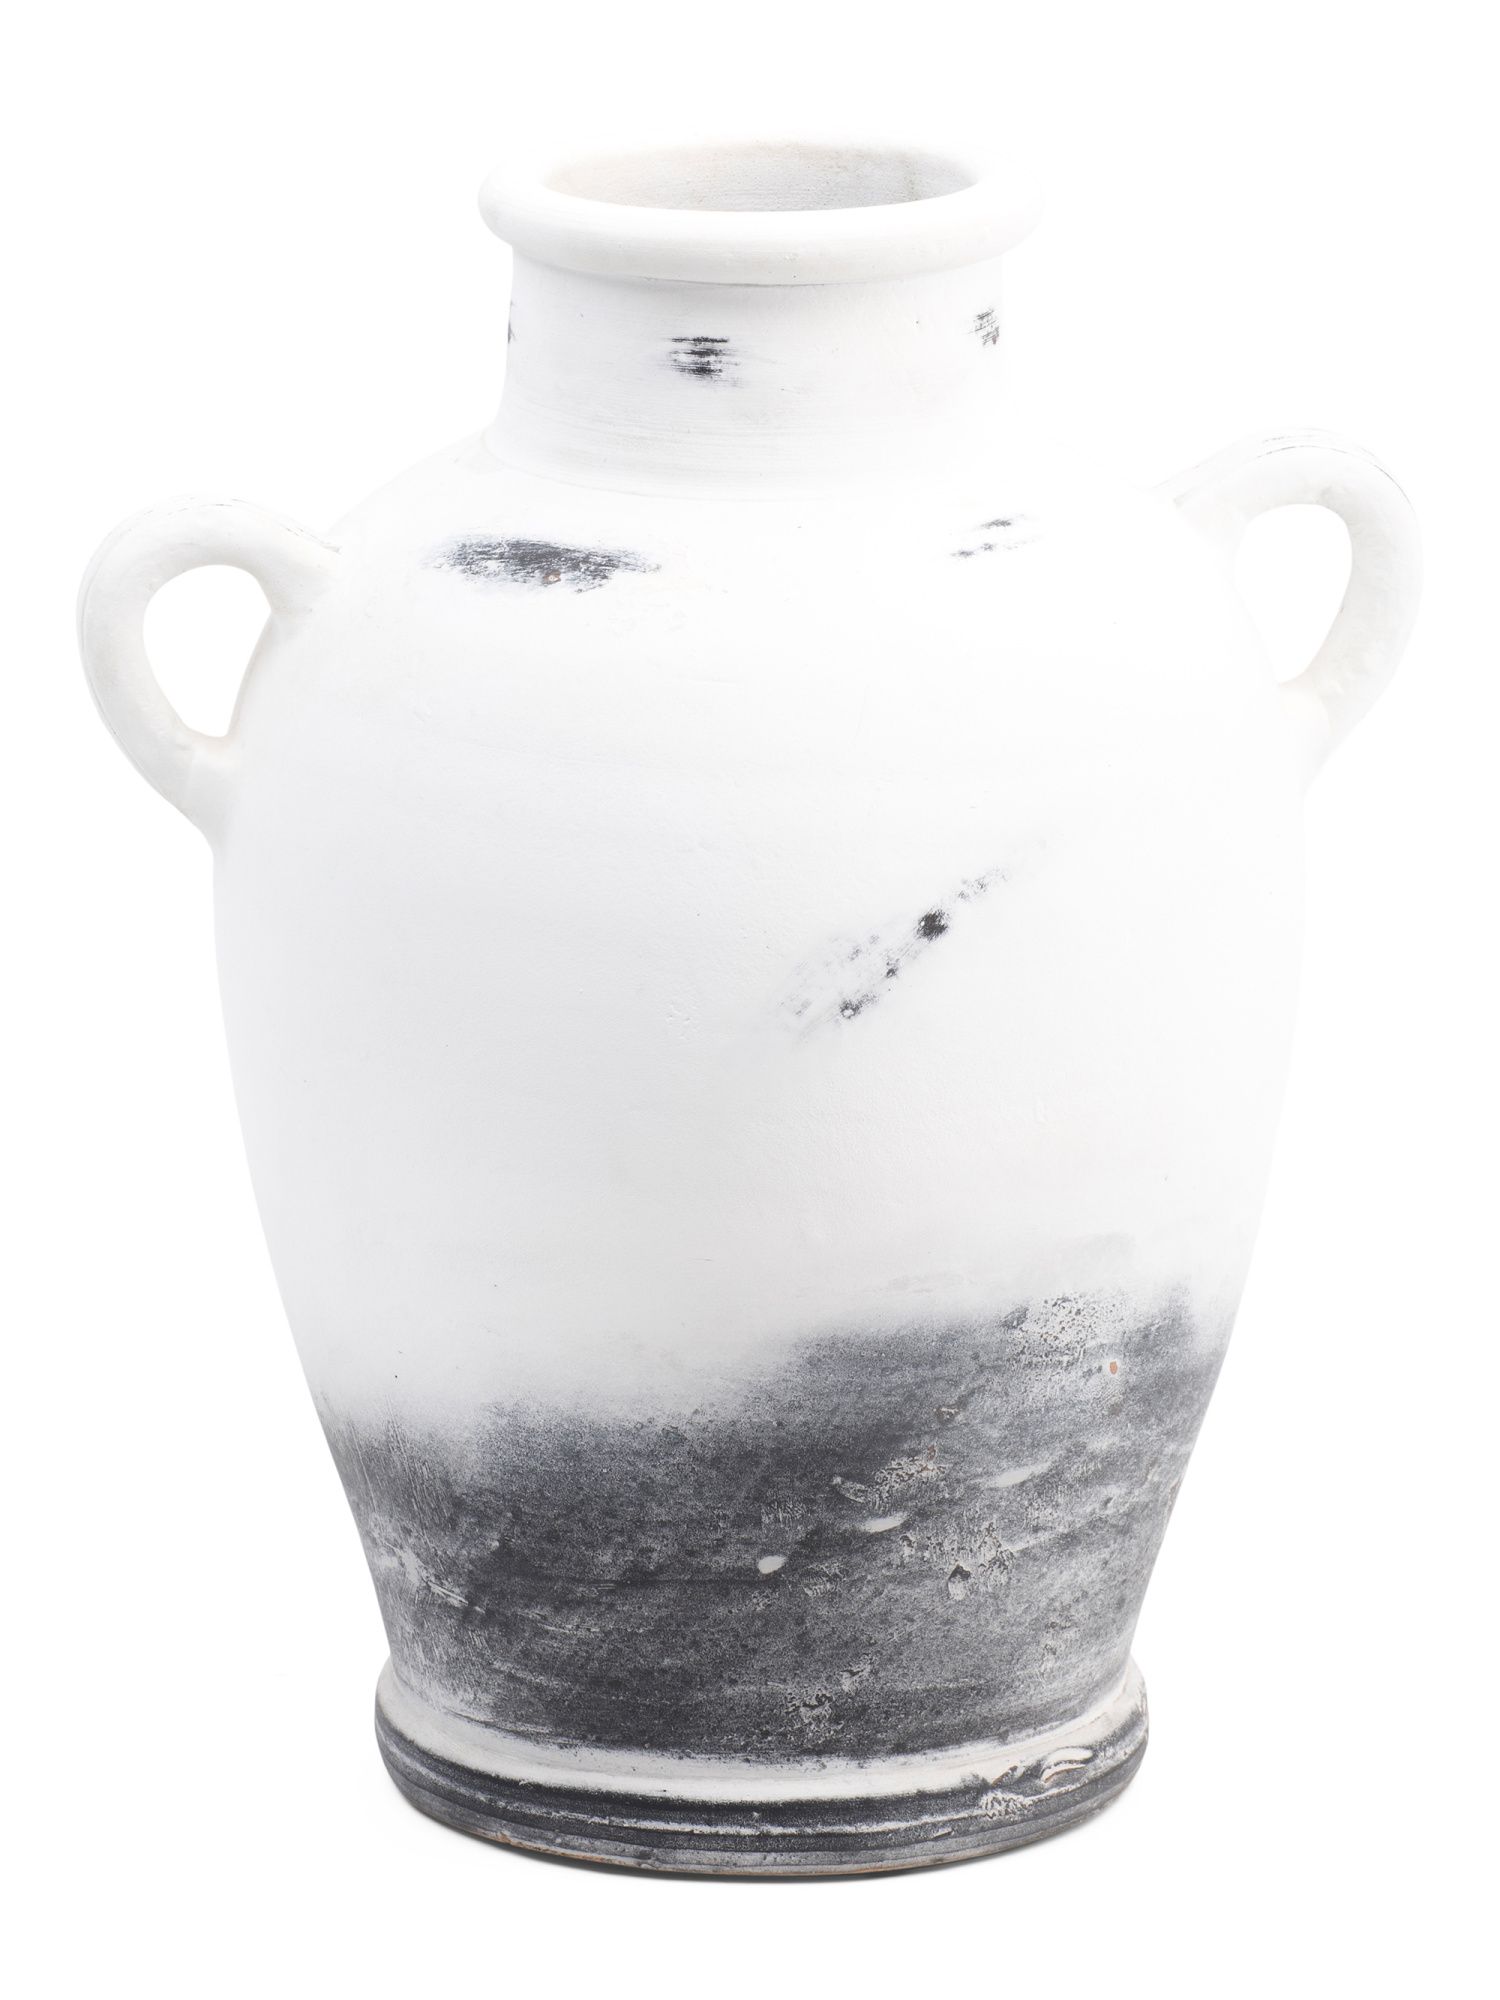 16in Lynden Terracotta Vase With Handles | TJ Maxx